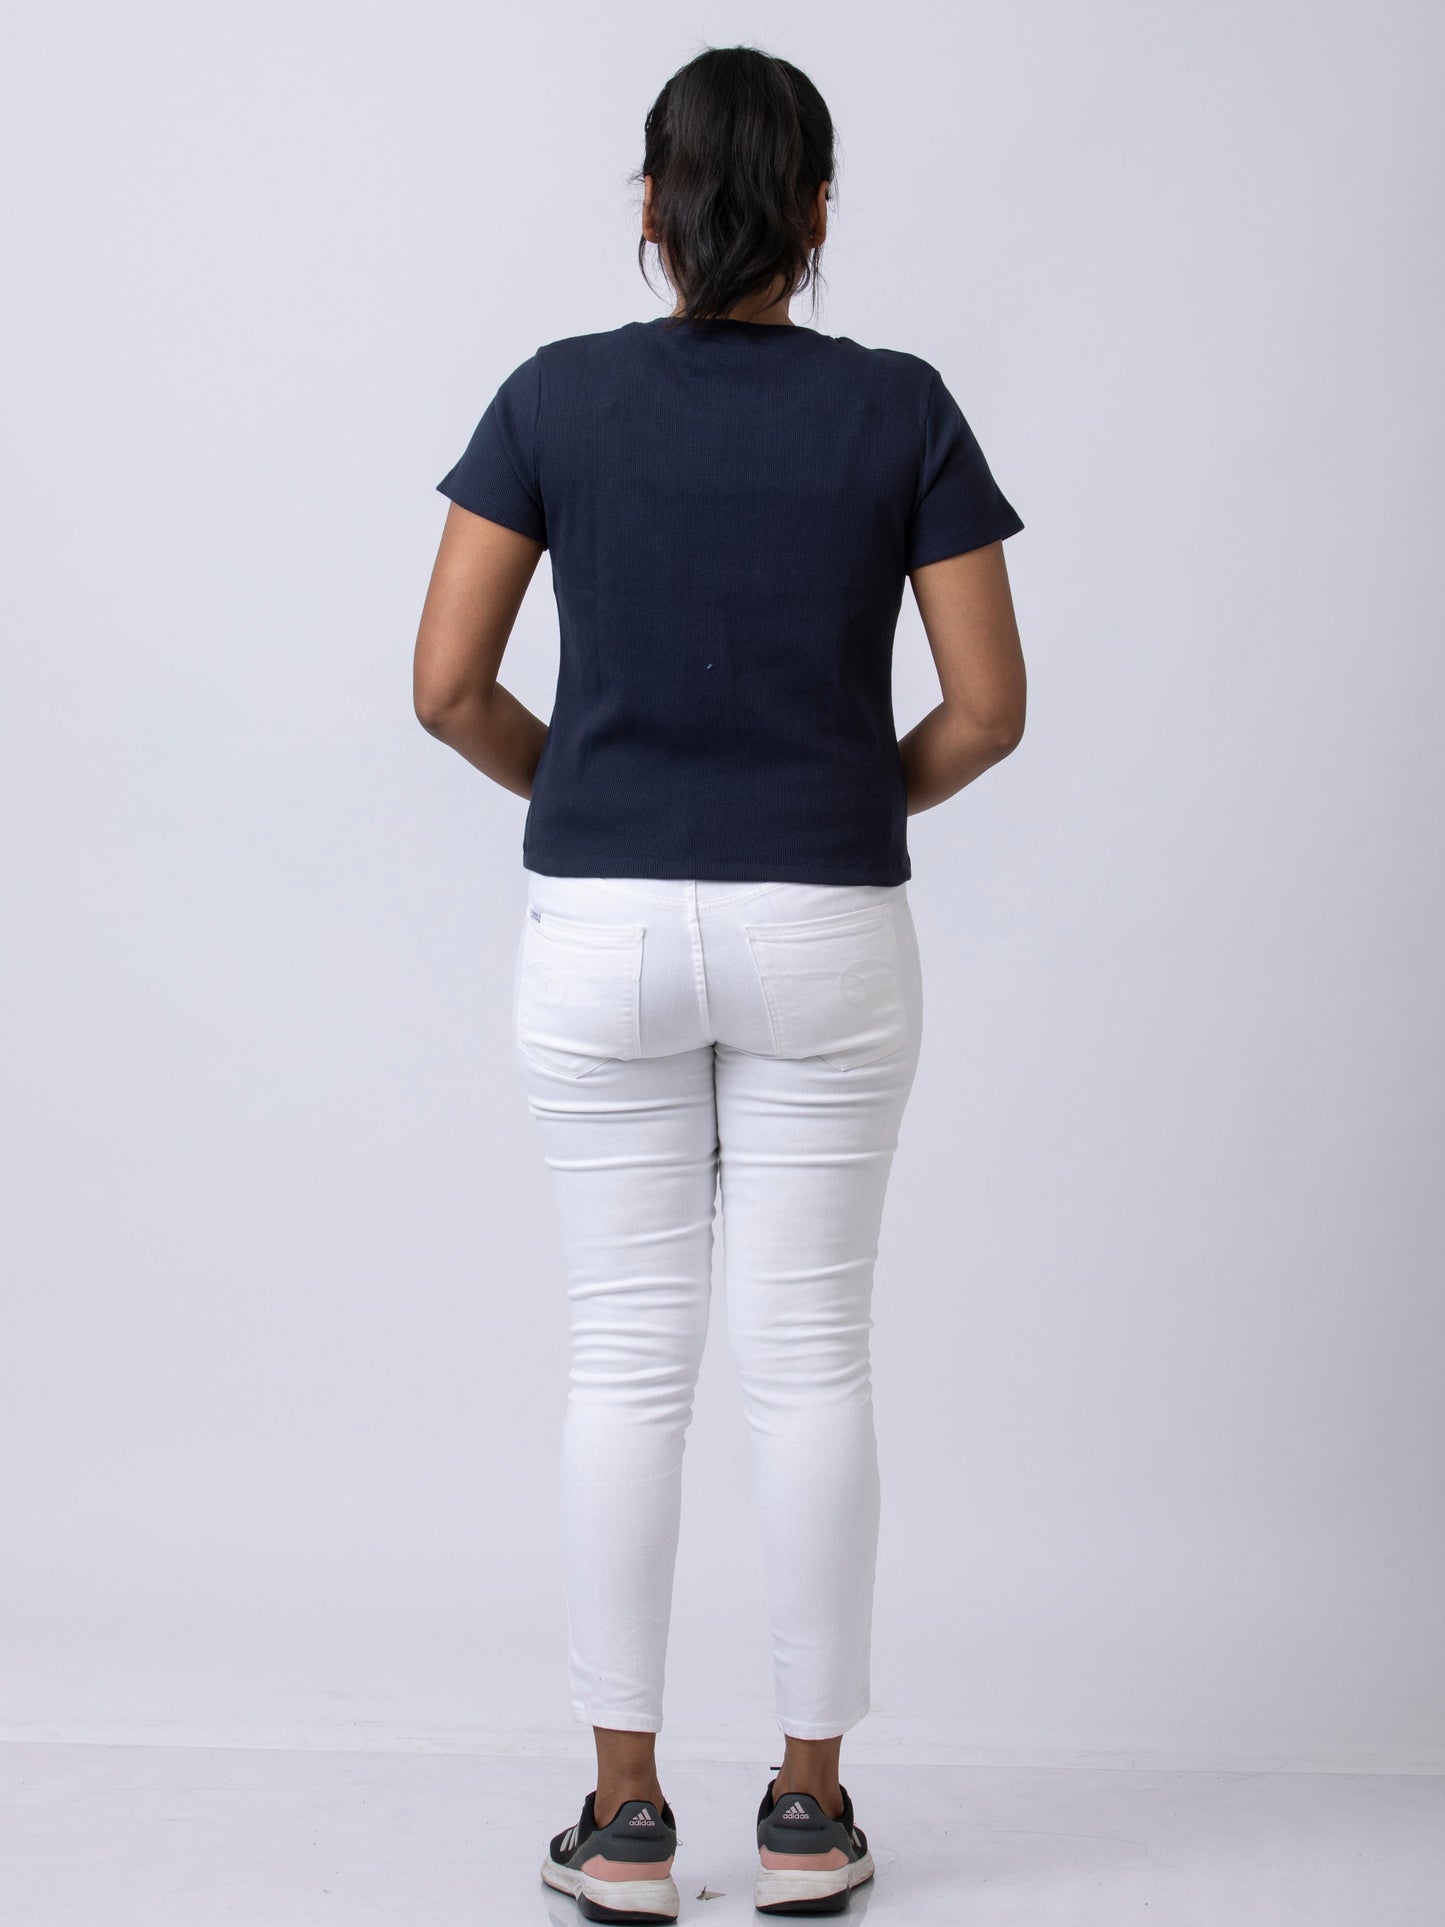 Soft & Premium Women's Printed Cotton T-Shirt - Navy